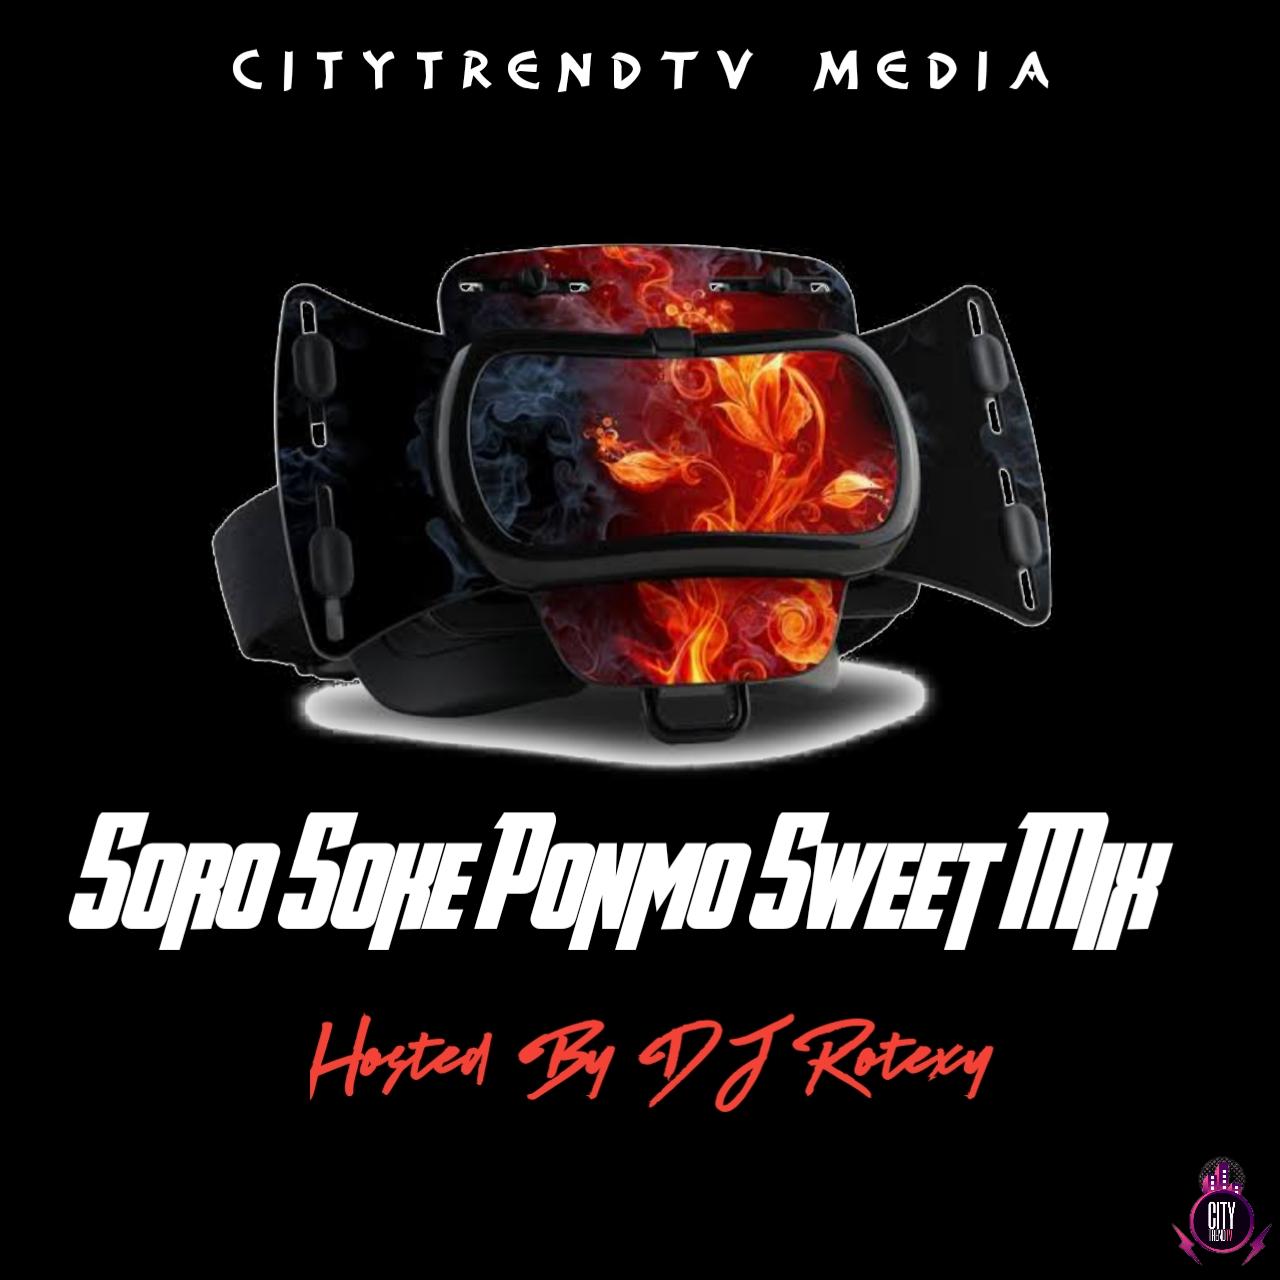 DJ Rotexy — Soro Soke Ponmo Sweet Mix